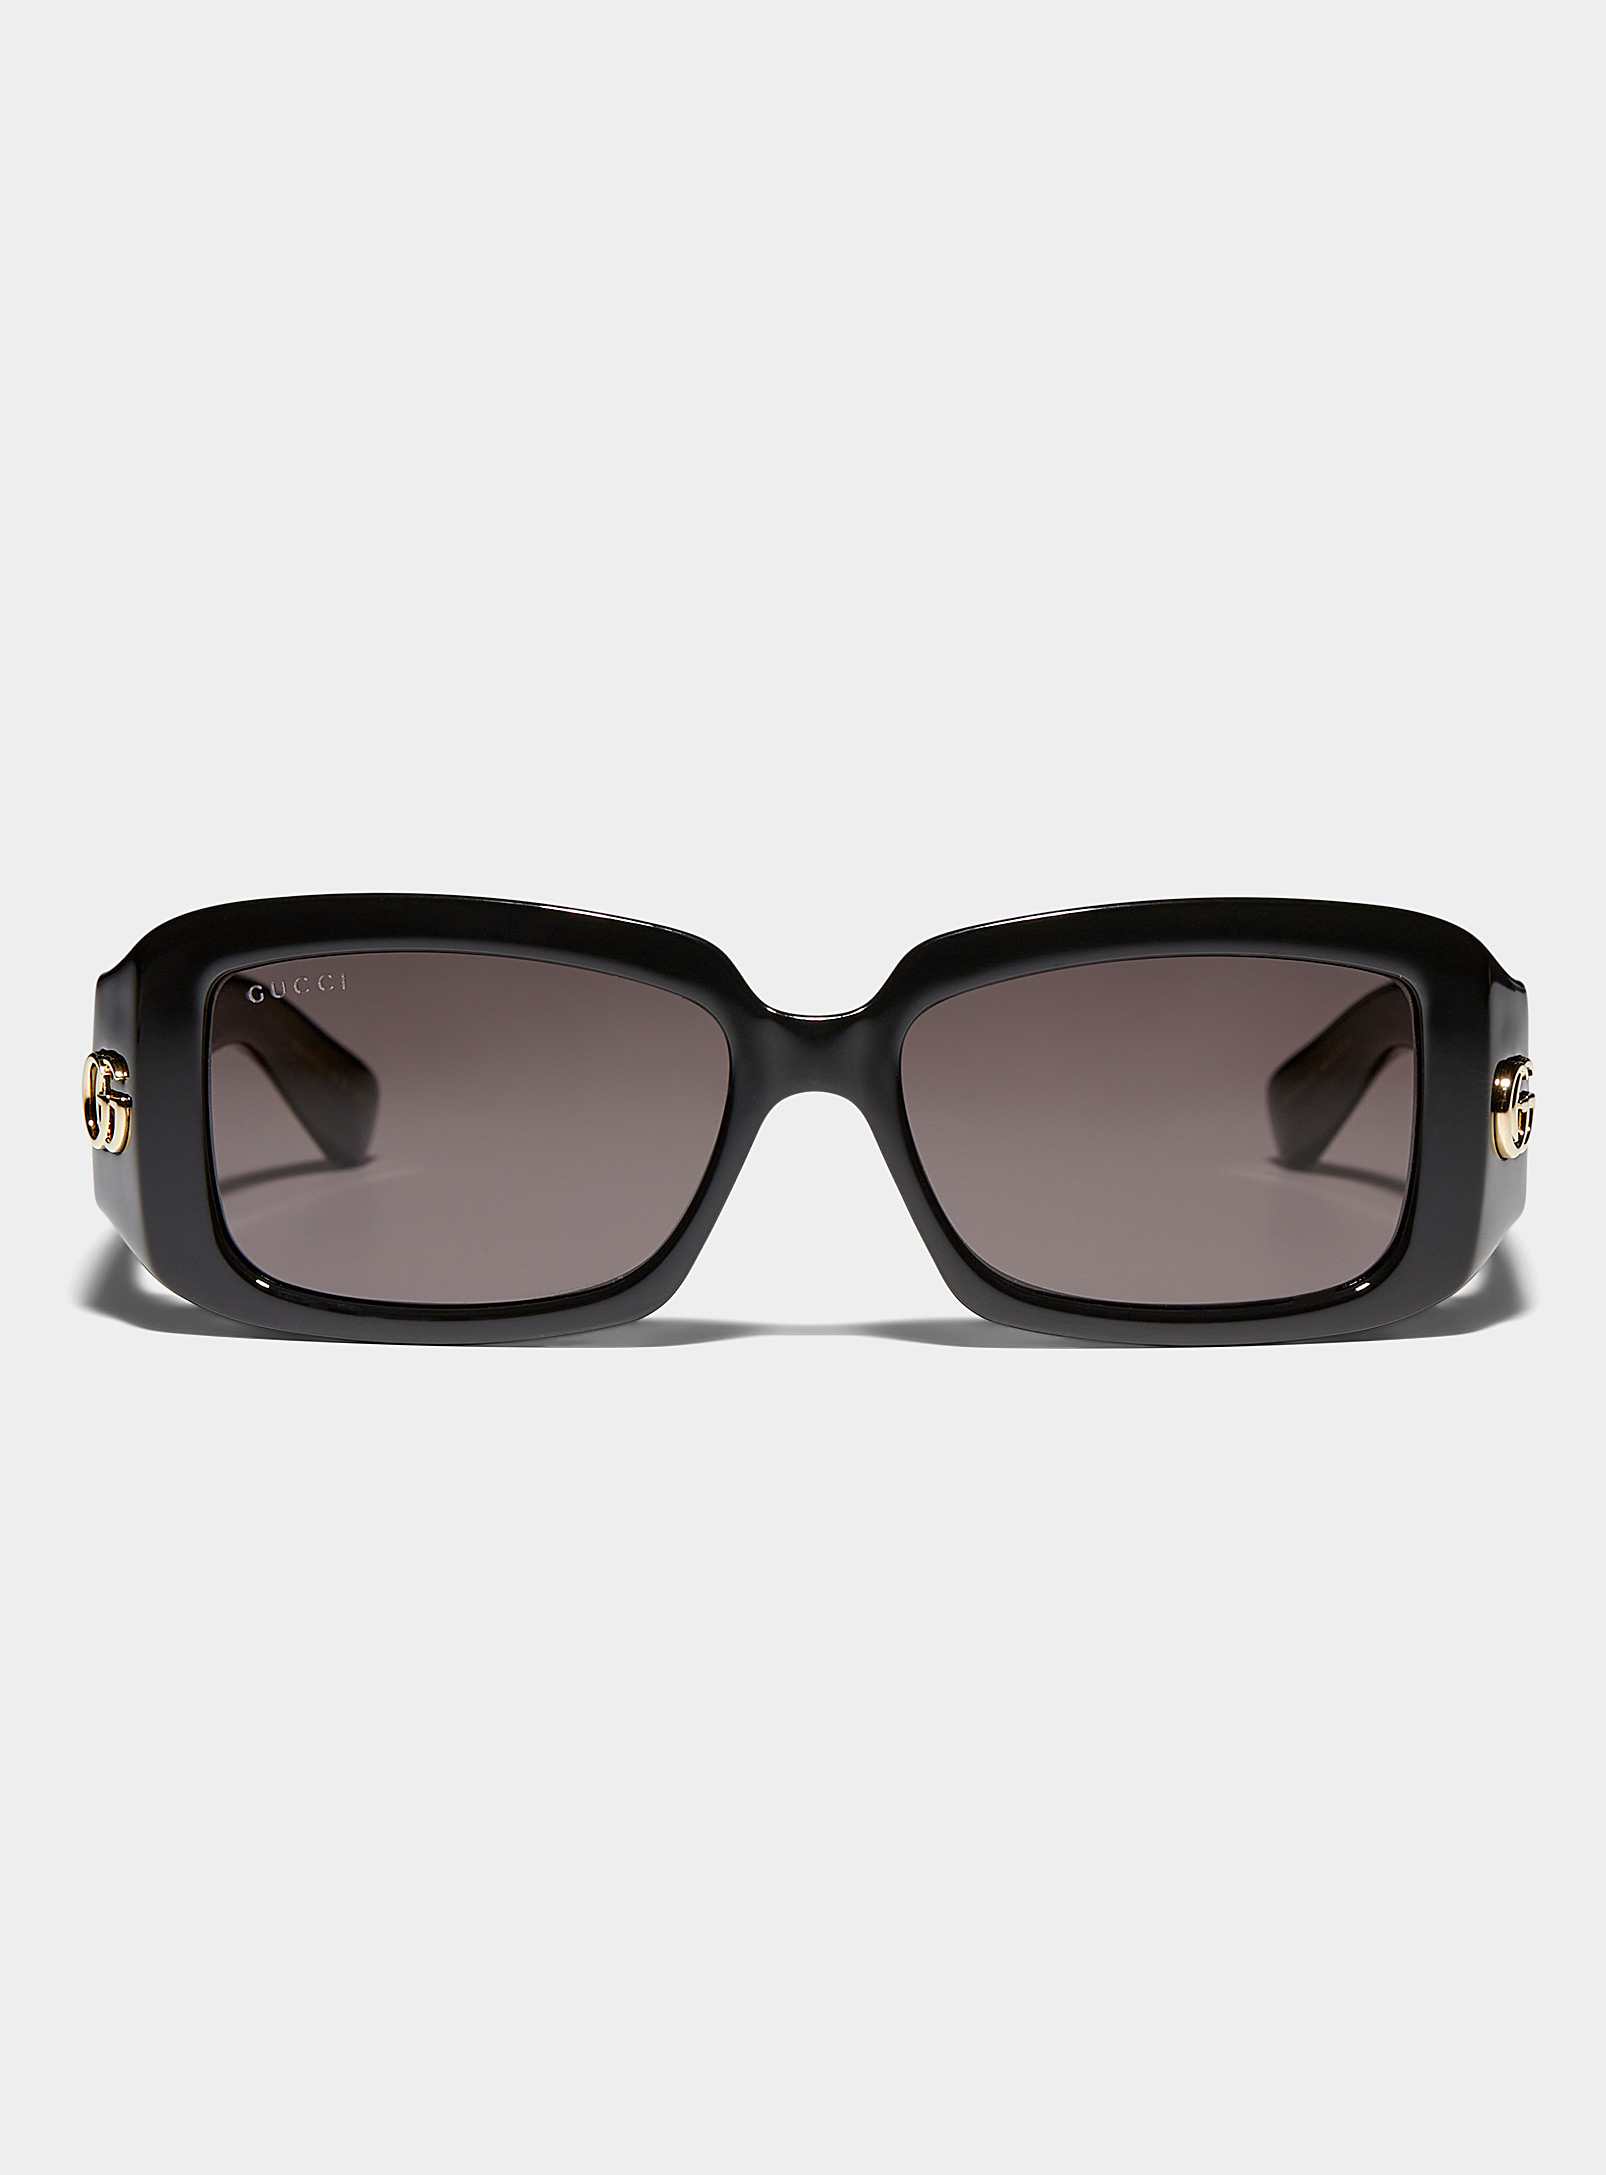 Gucci - Women's Massive temples rectangular sunglasses